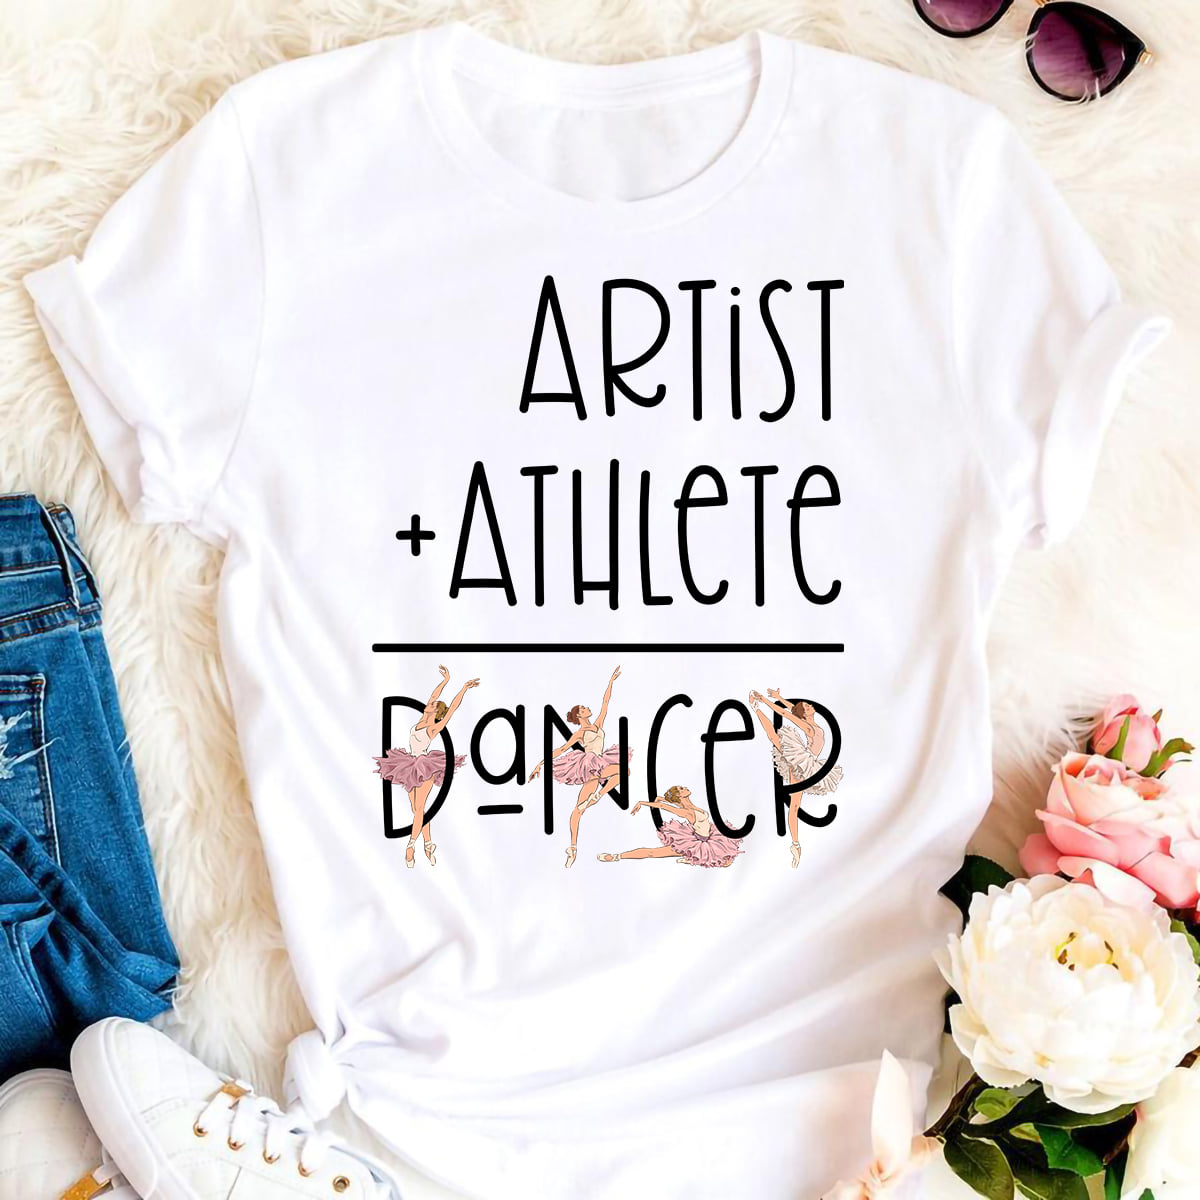 Artist + athlete = dancer - Love dancing, ballete lover